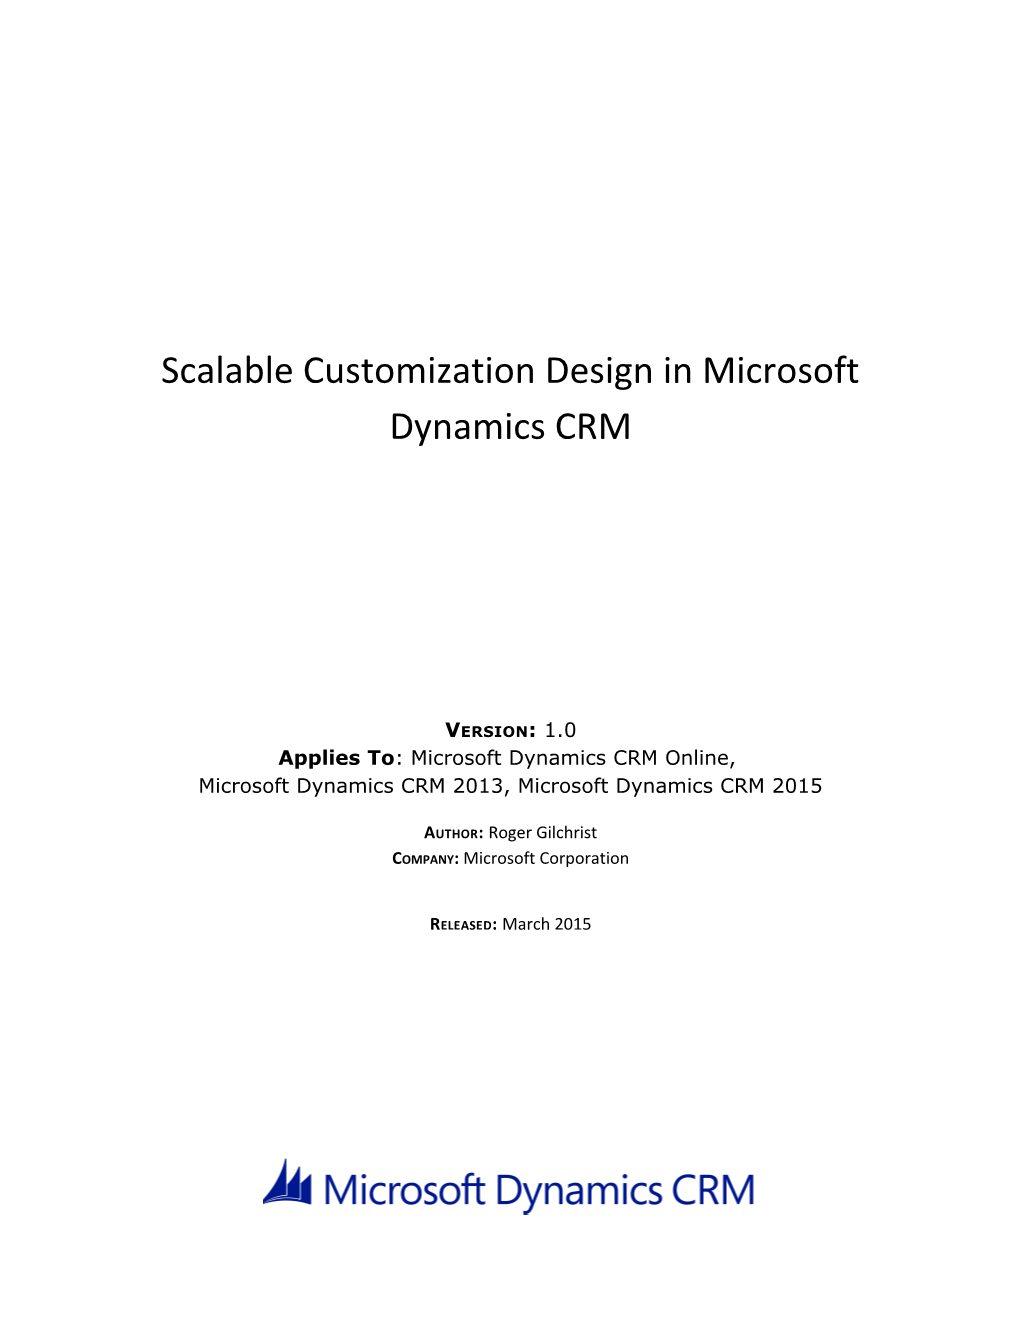 Scalable Customization Design in Microsoft Dynamics CRM